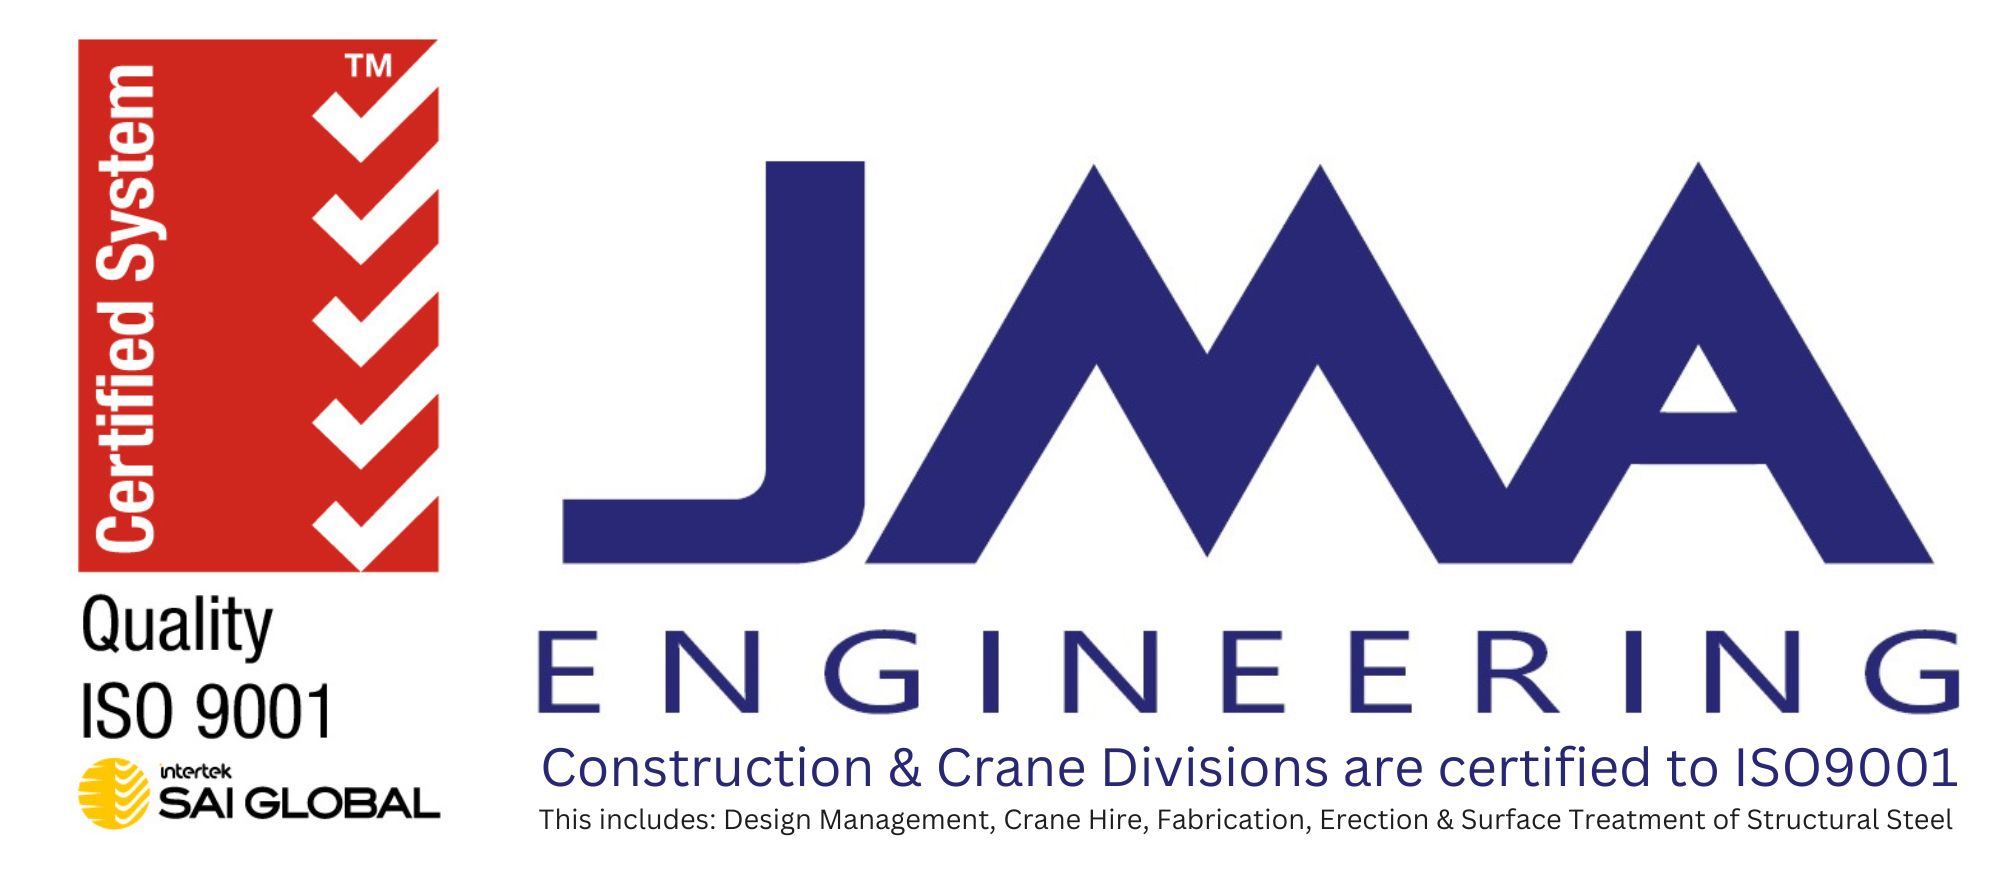 JMA Engineering 